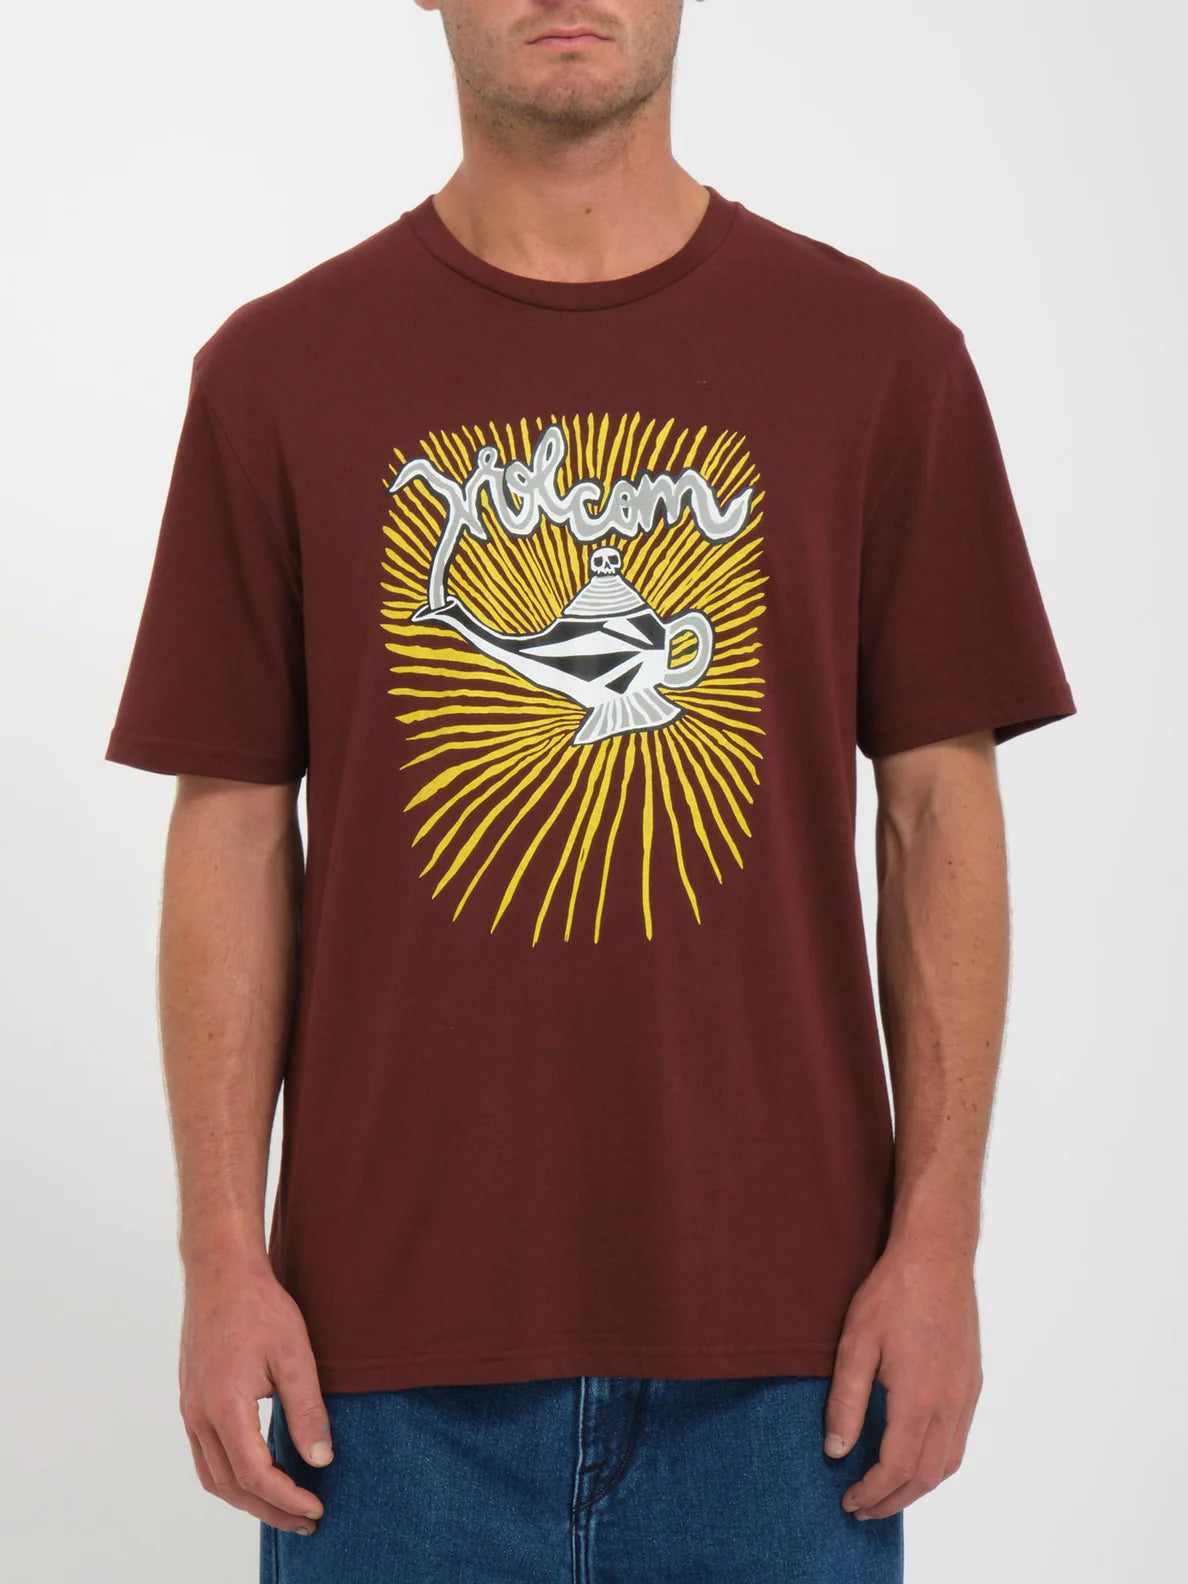 Camiseta Volcom Gonymagic - Bitter Chocolate | Camisetas de hombre | Camisetas manga corta de hombre | Volcom Shop | surfdevils.com